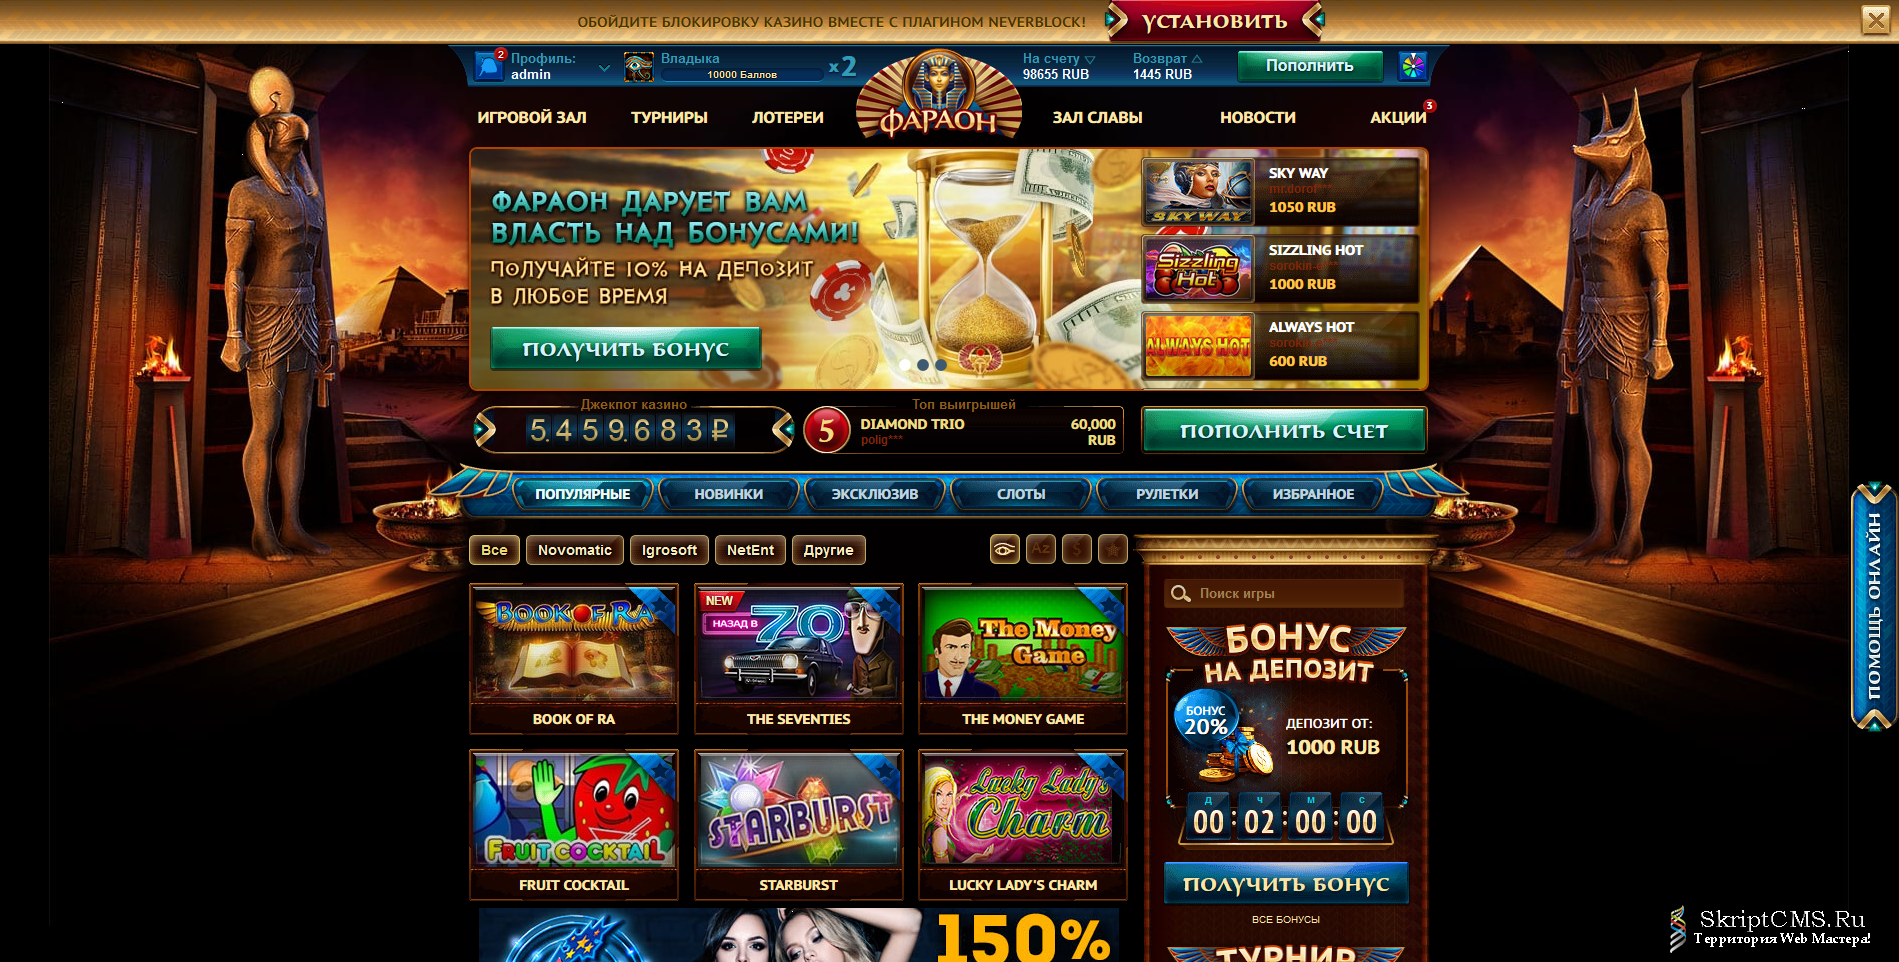 Online casino script el casino фильм